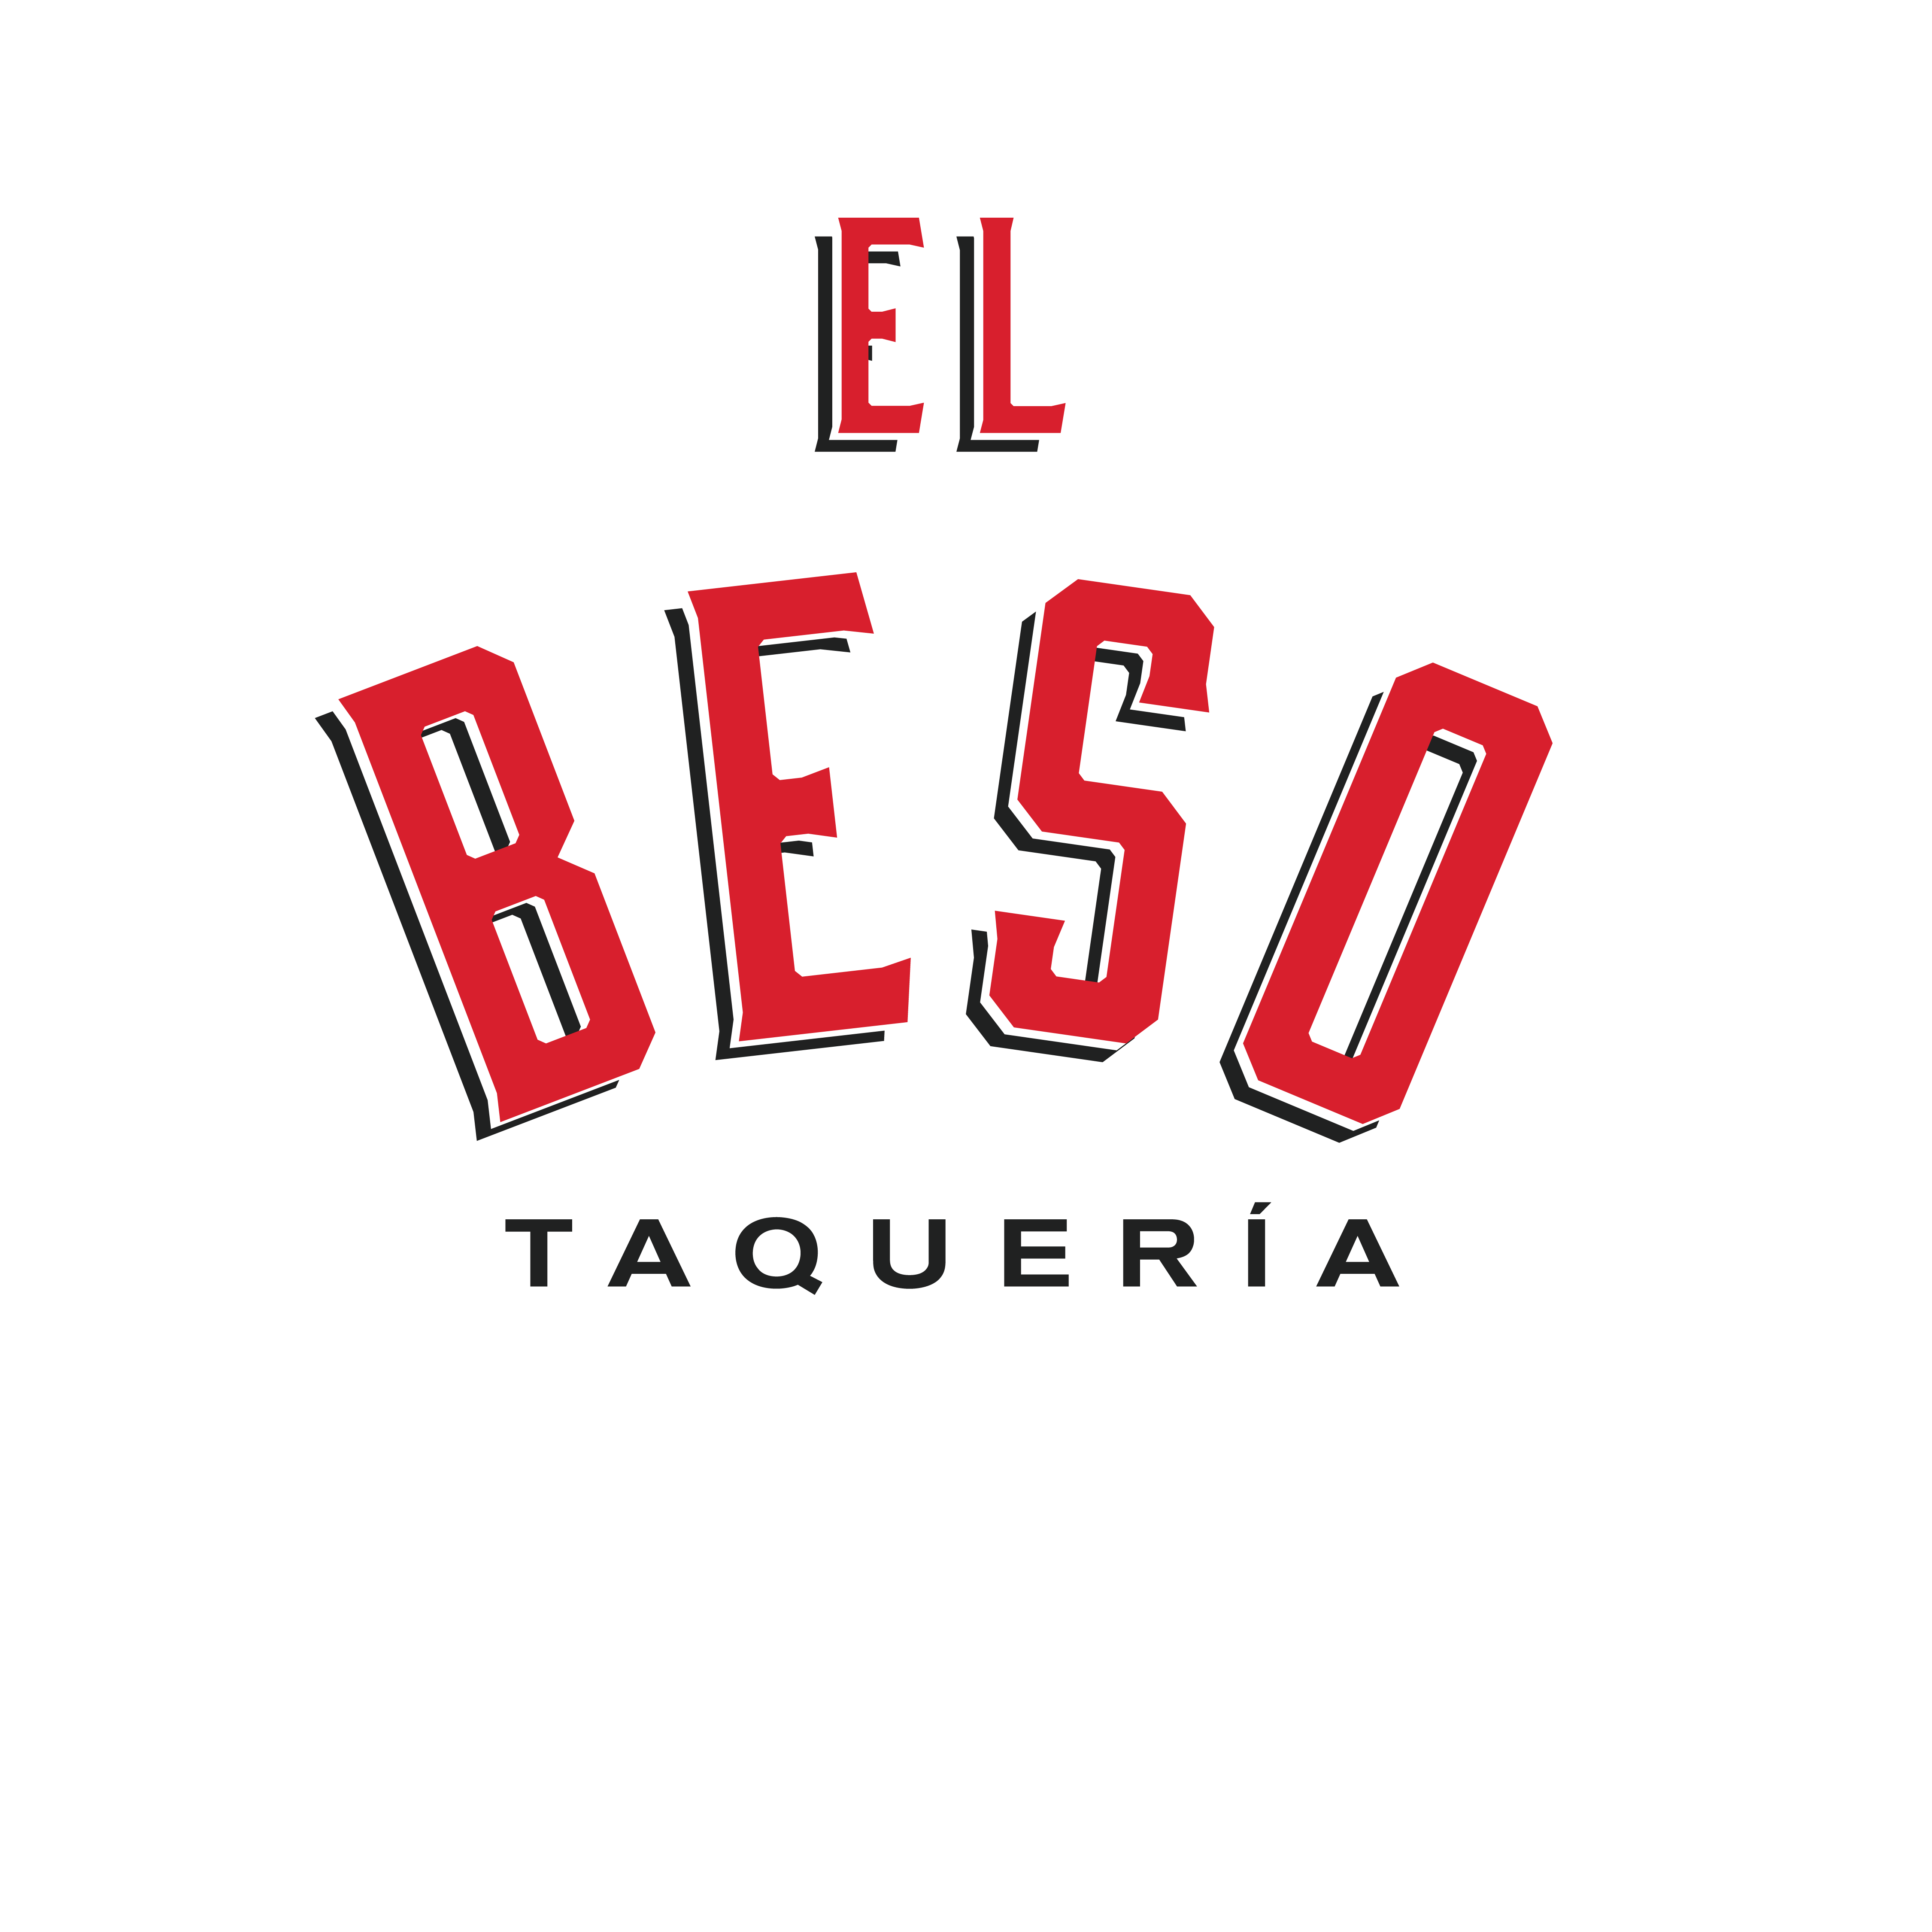 El Beso Taqueria